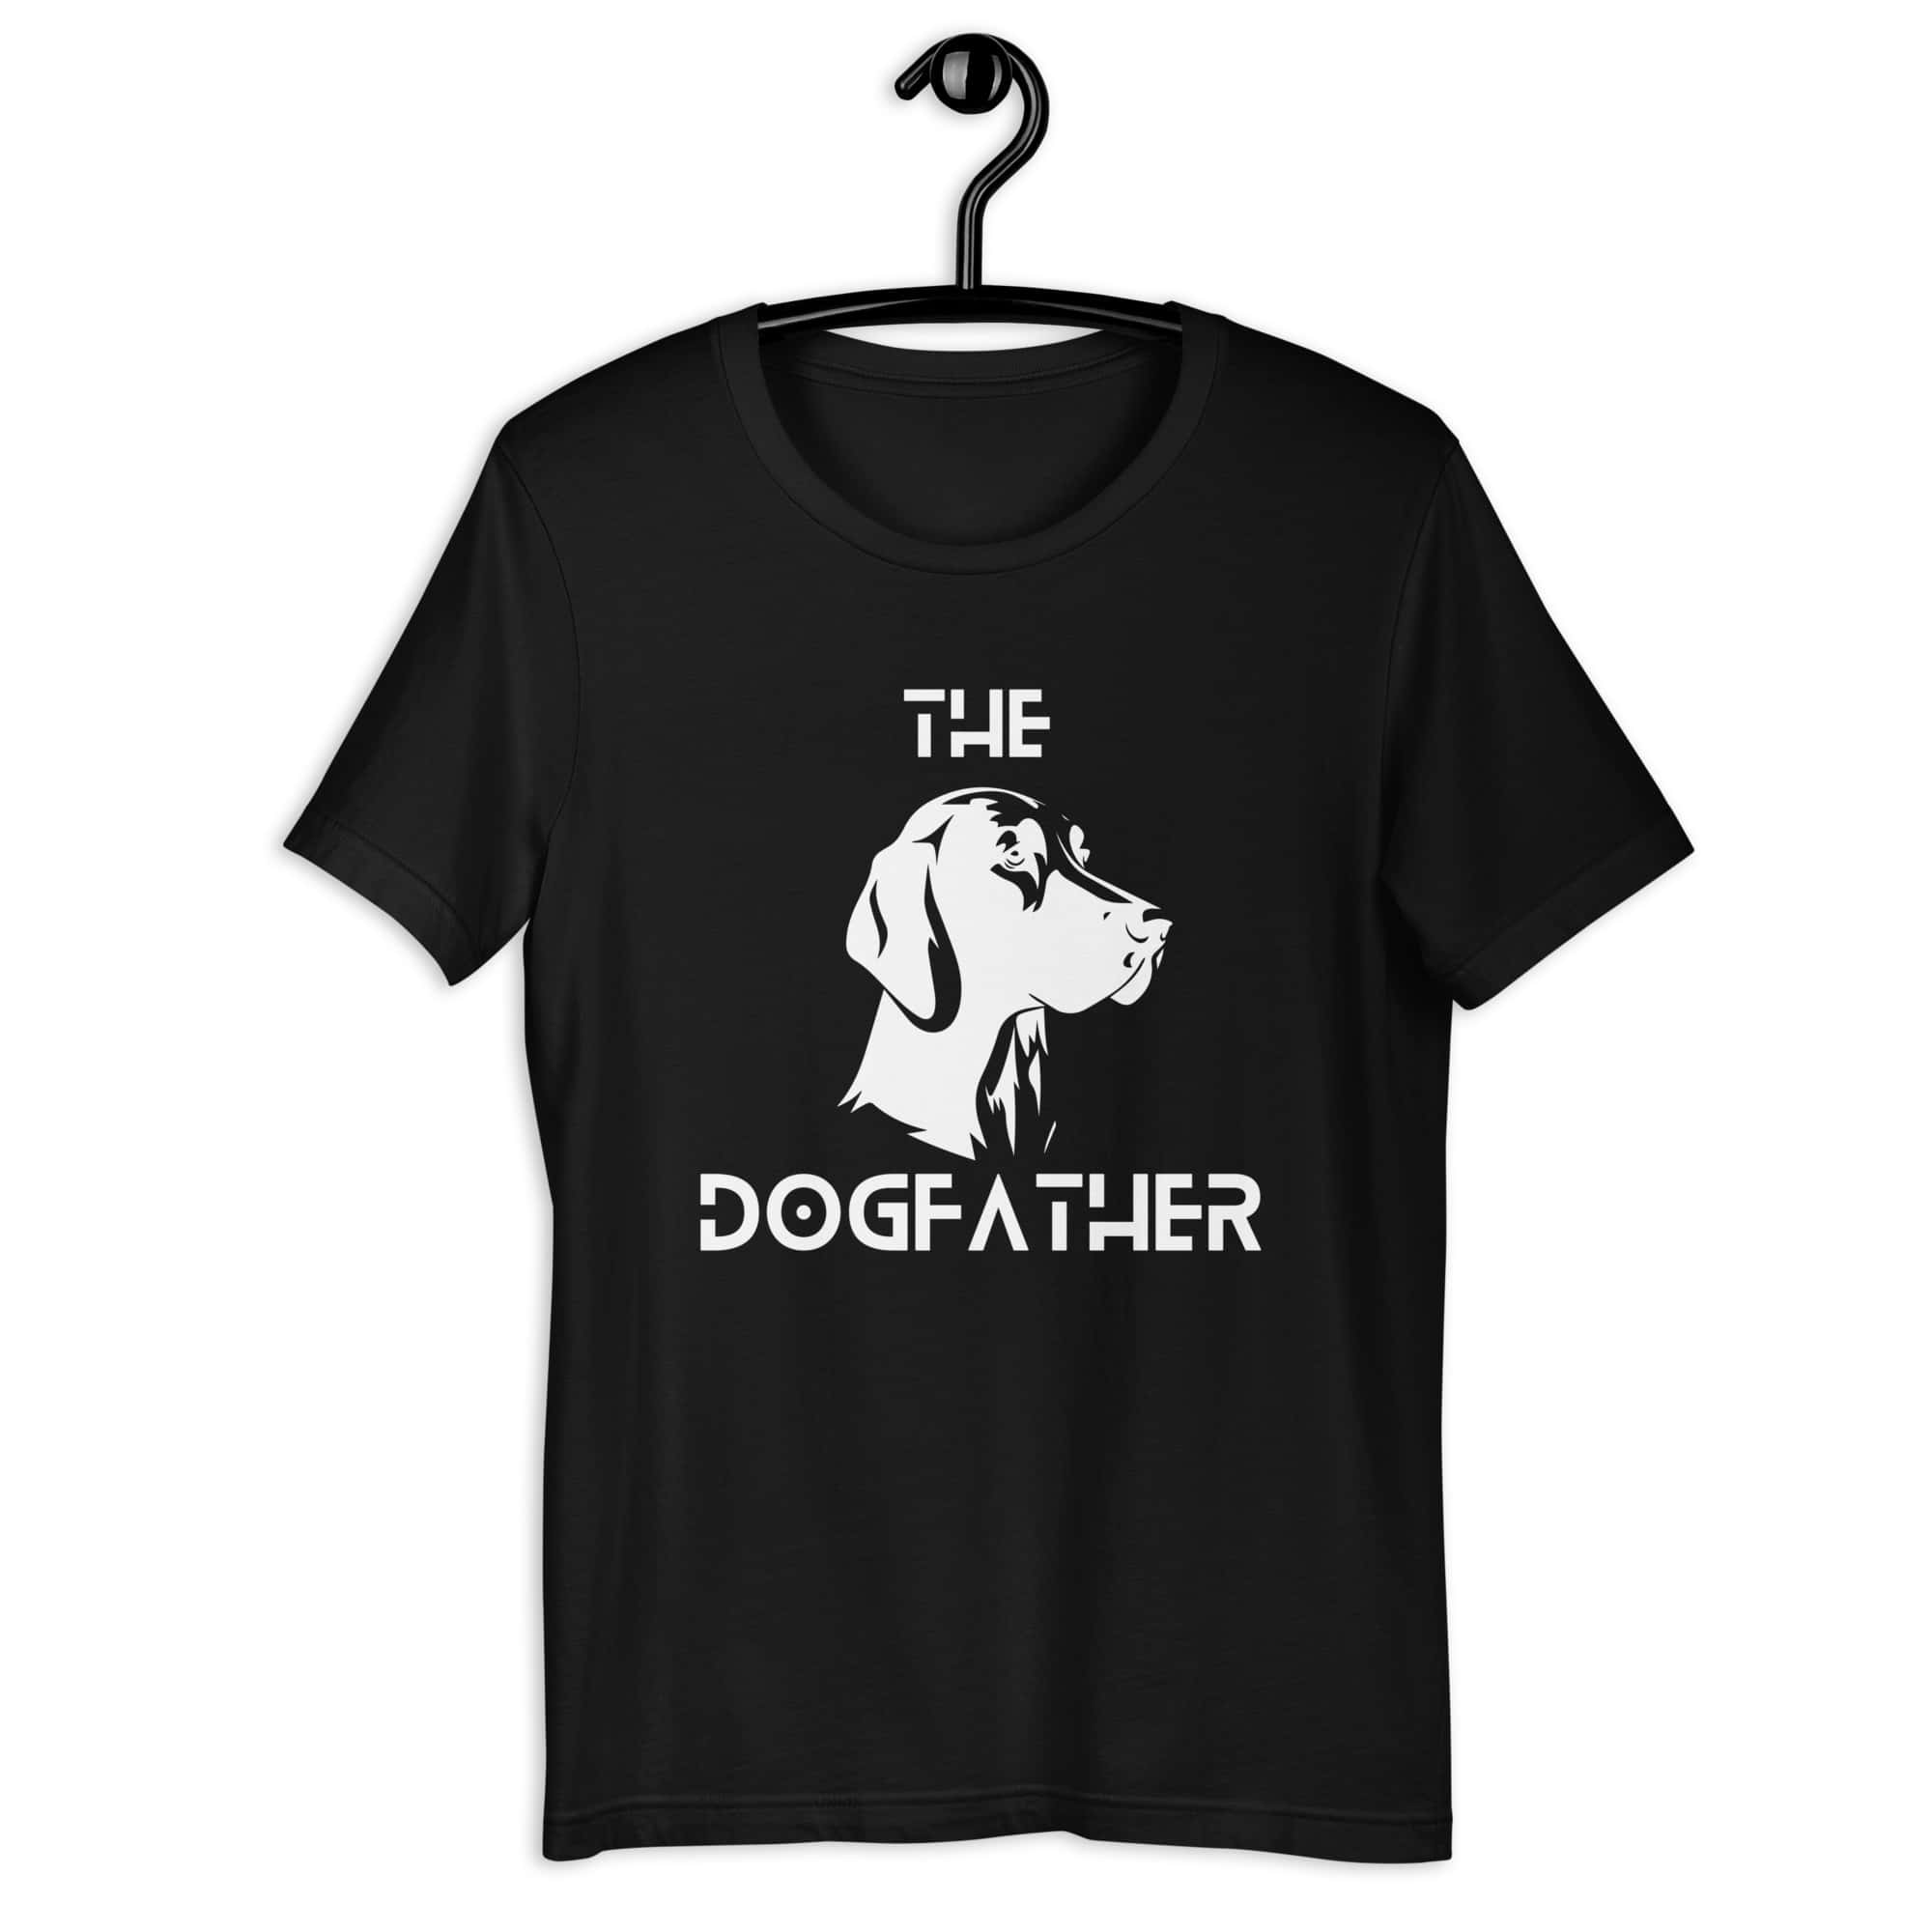 The Dogfather Retrievers Unisex T-Shirt. Black